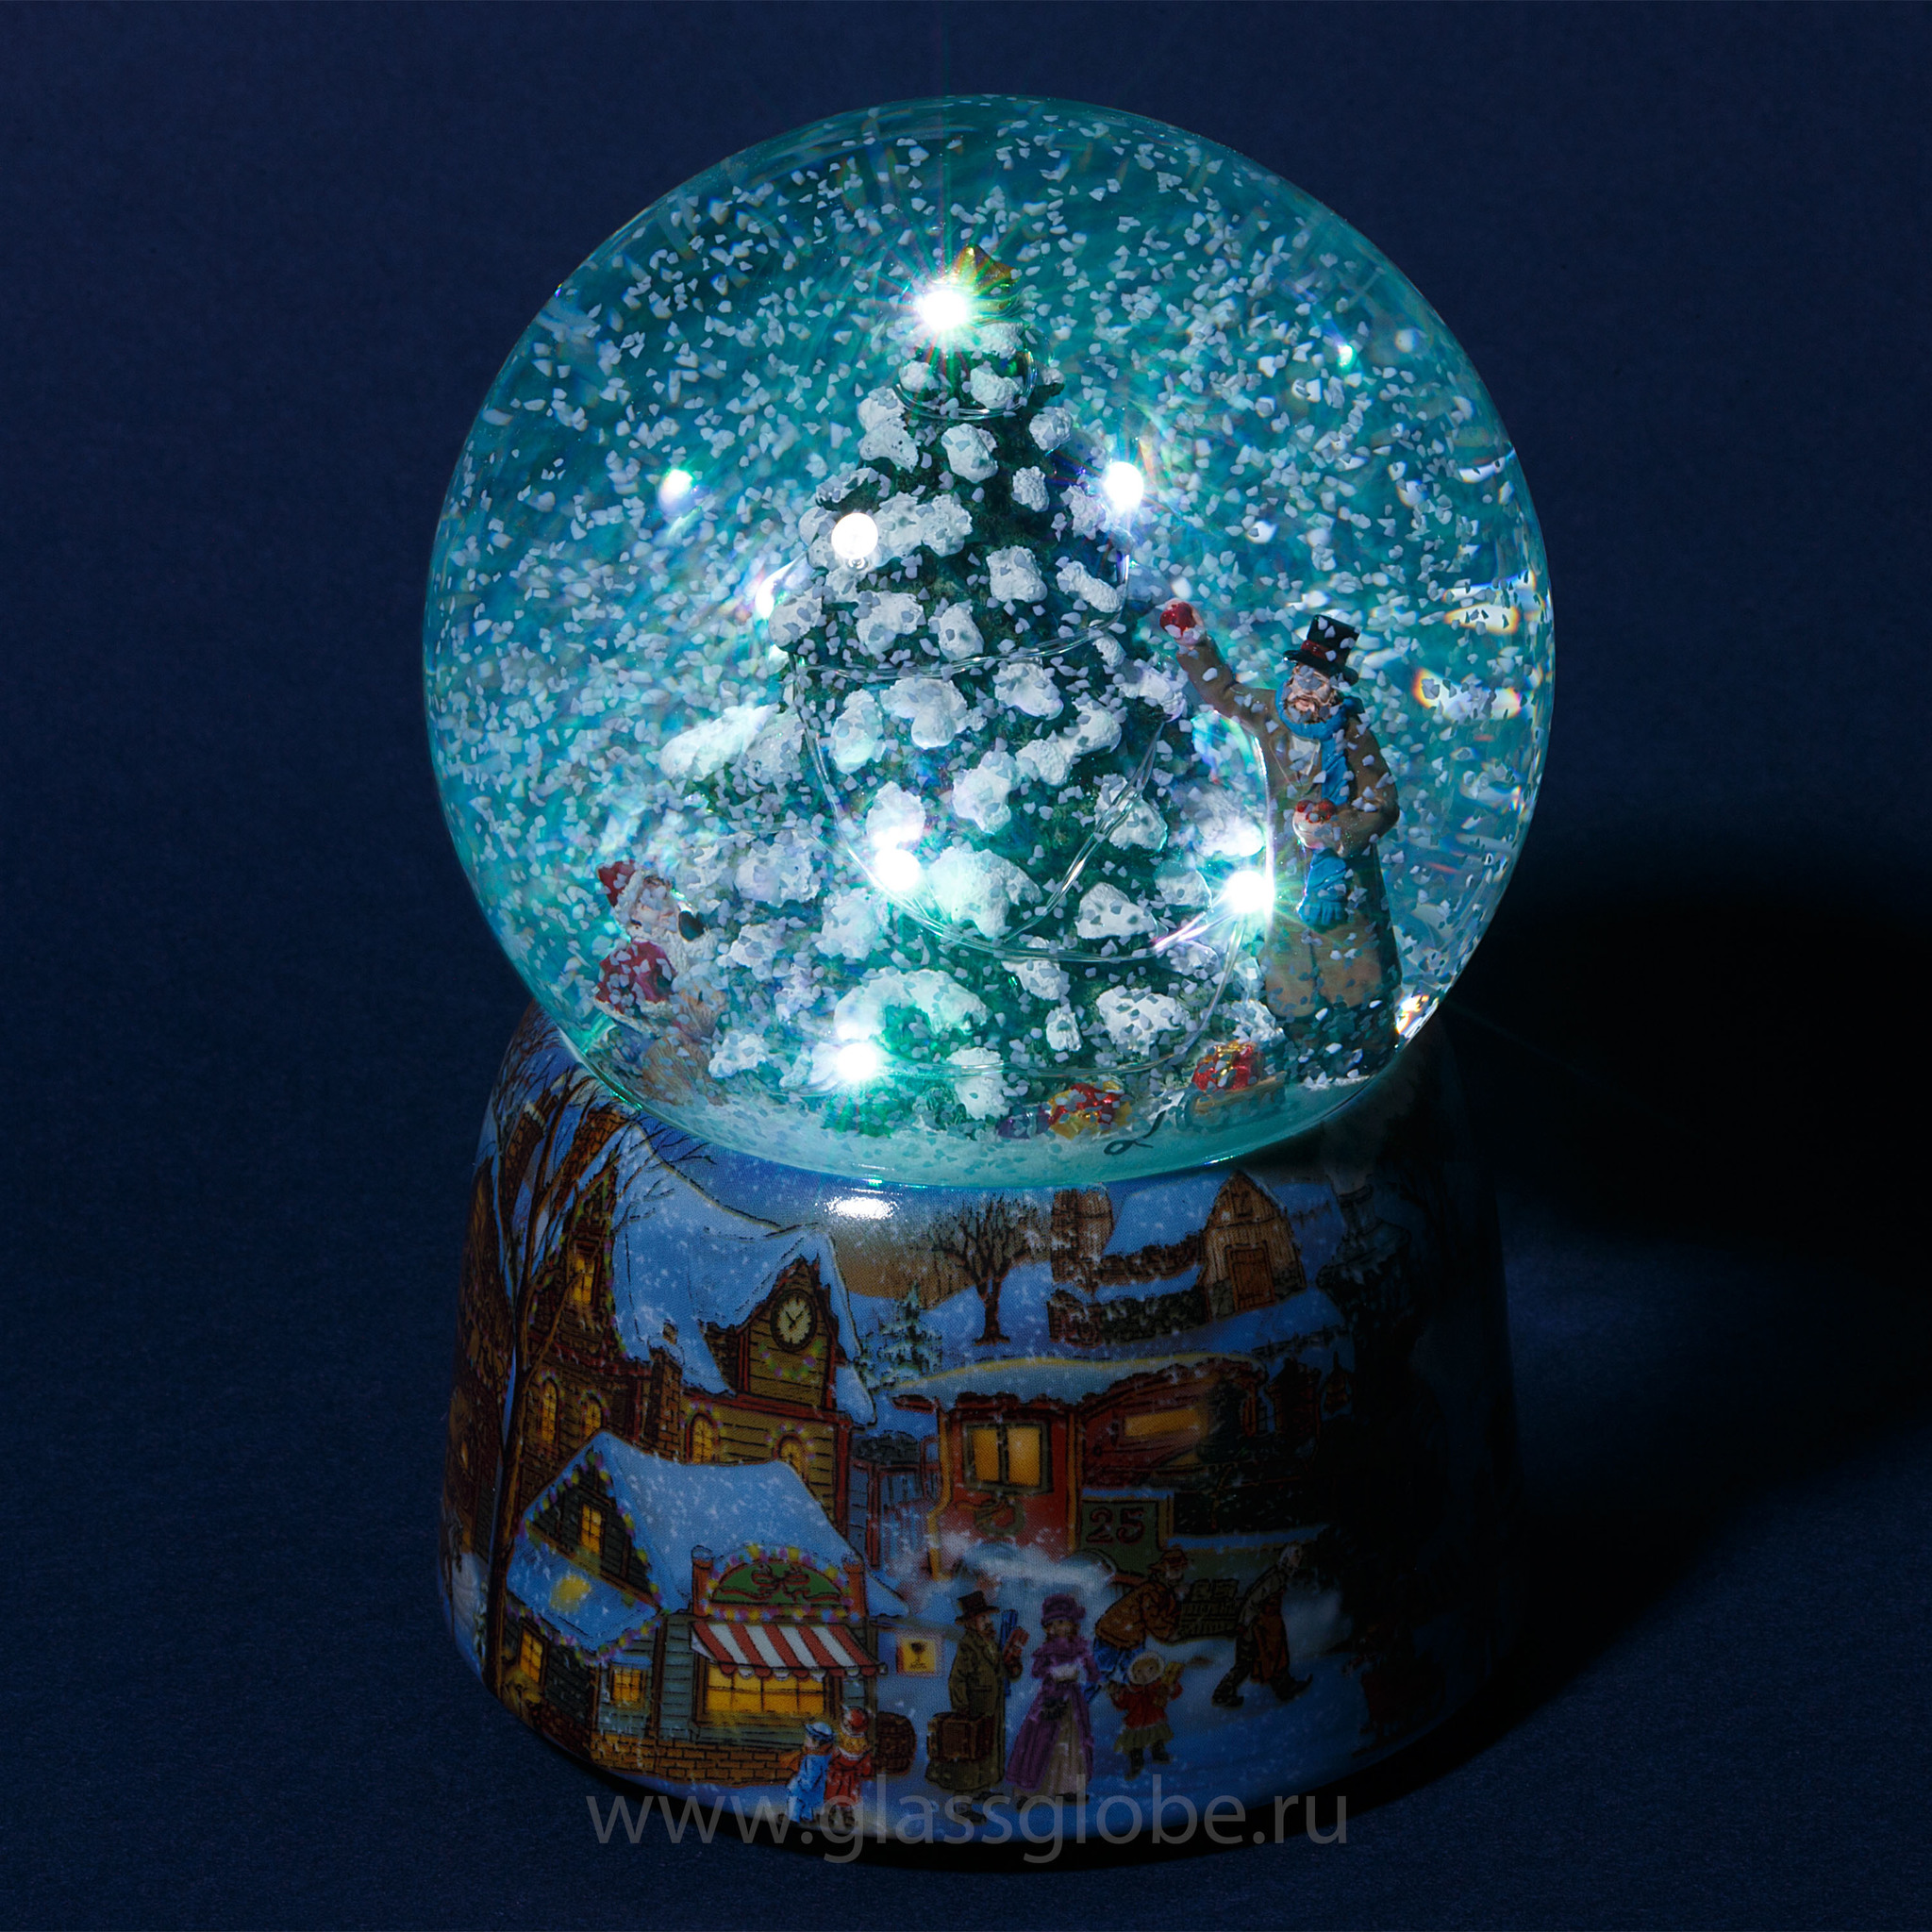 Glassglobe / шар со снегом 